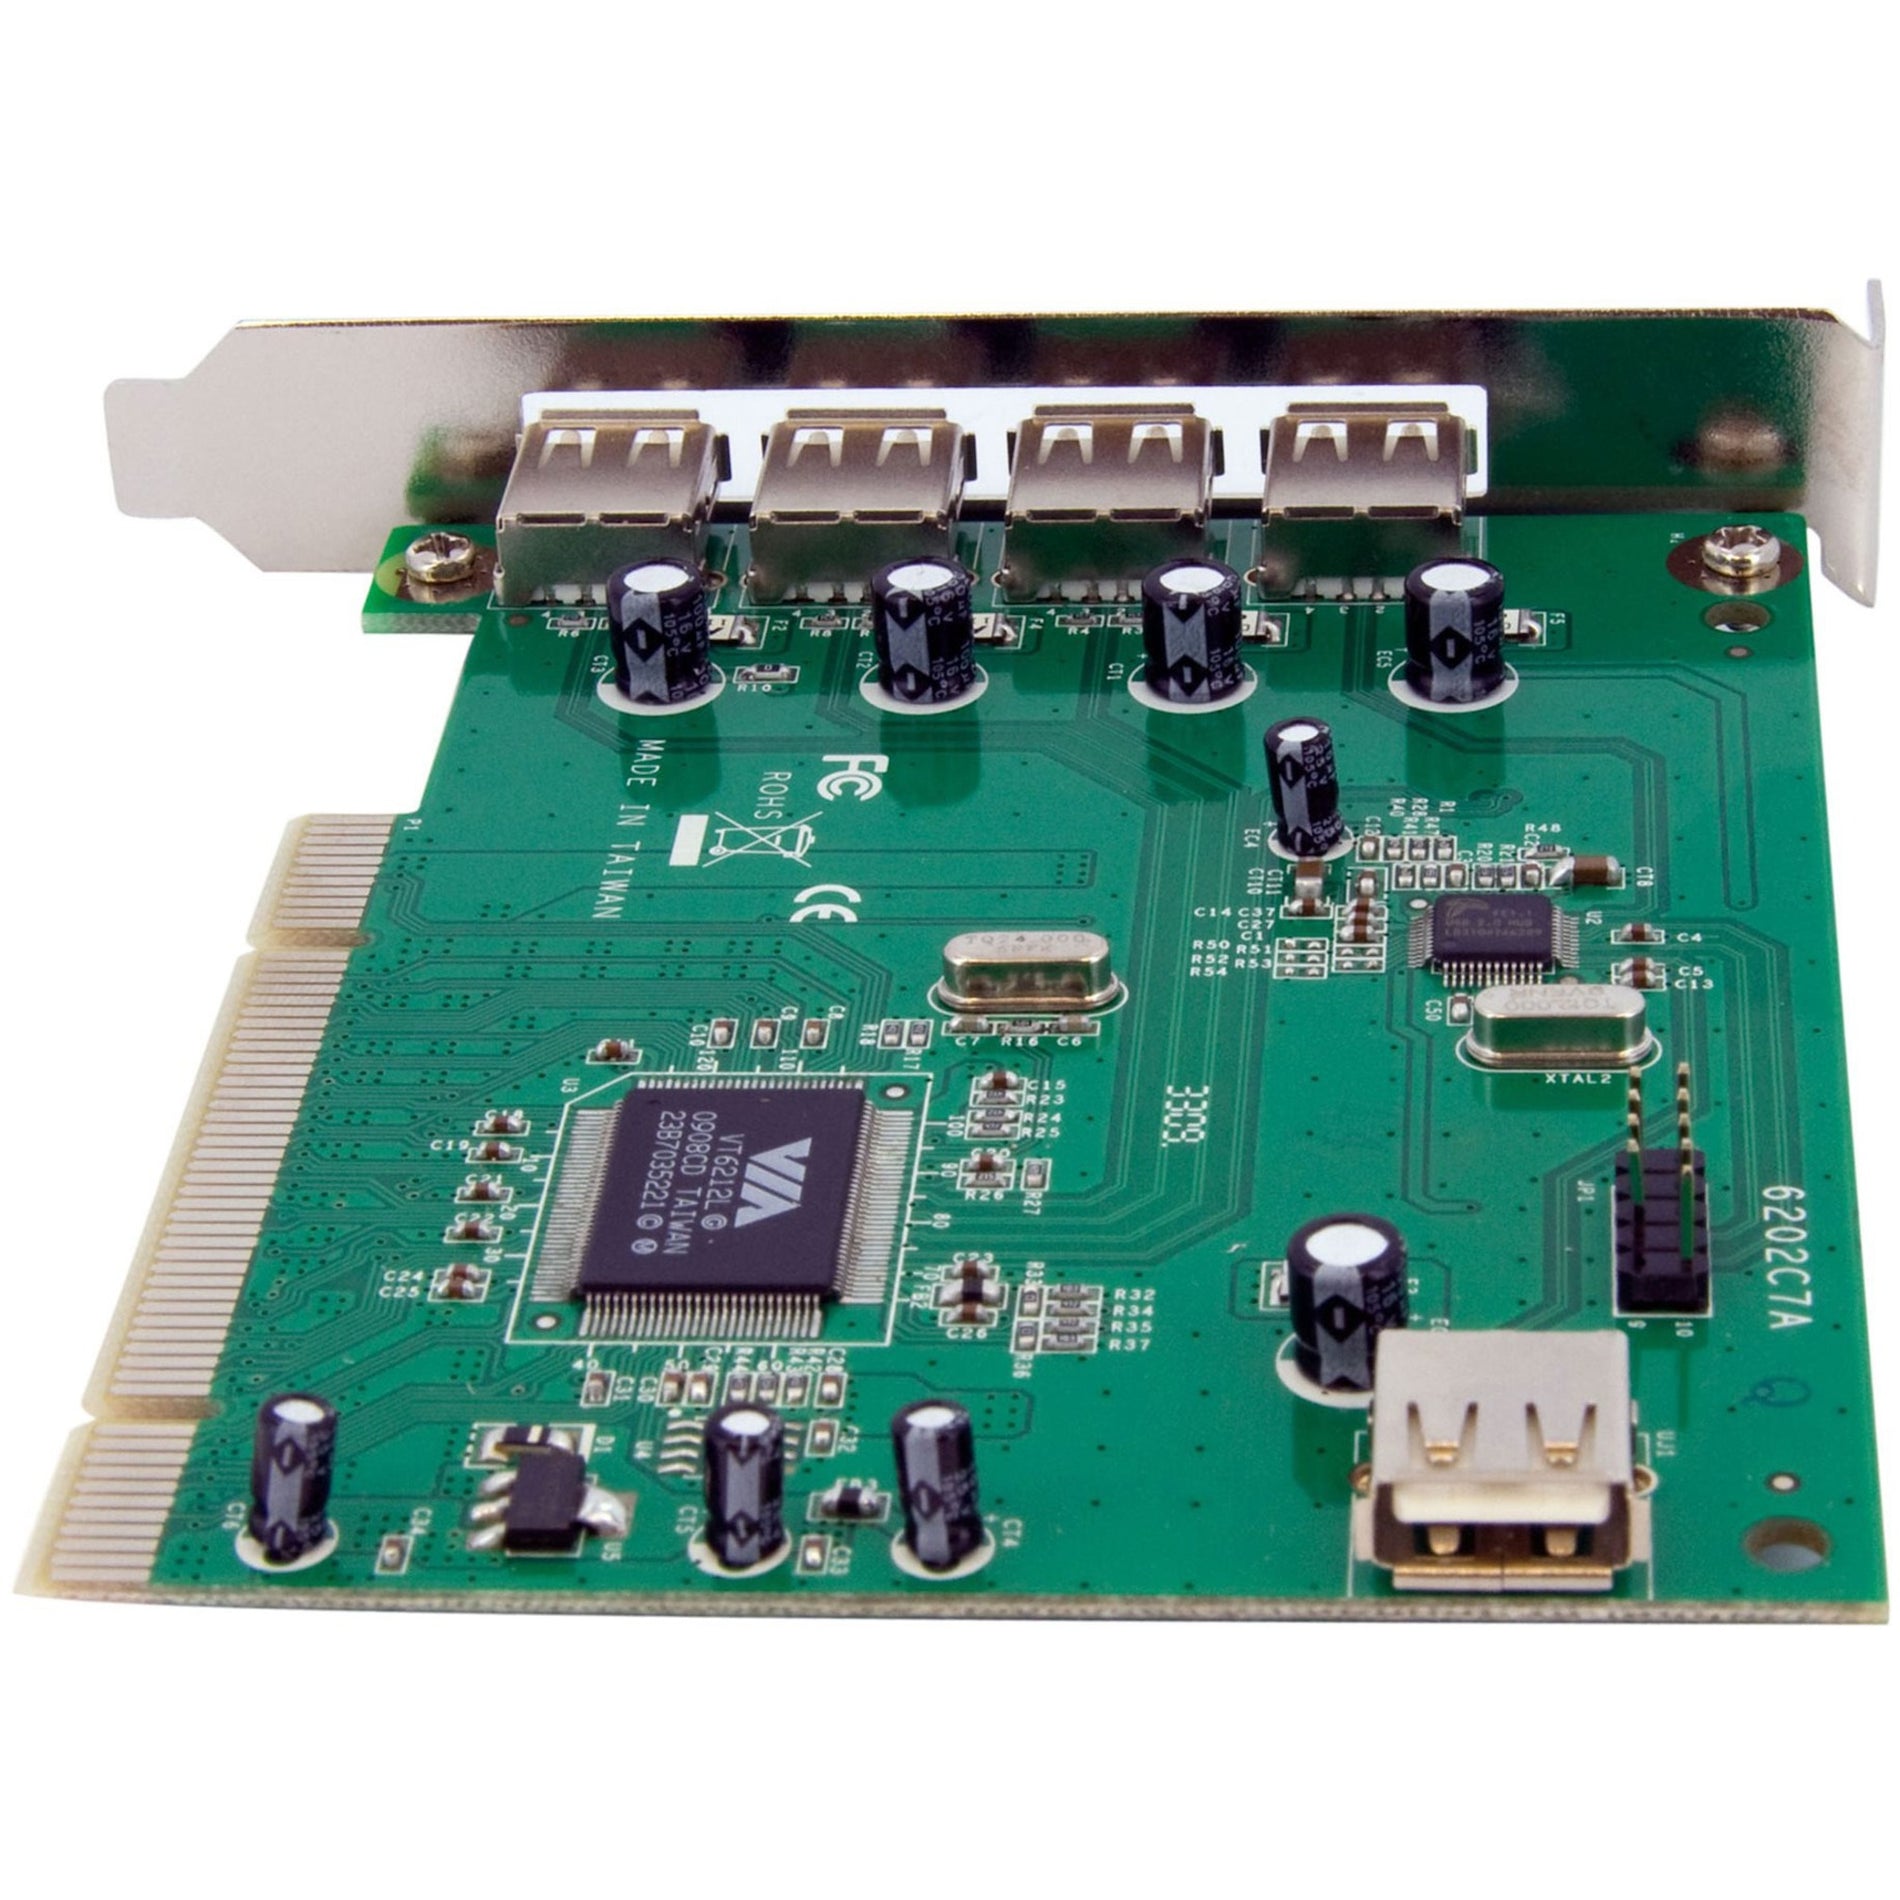 StarTech.com PCIUSB7 7 Port PCI USB 2.0 Adapter Card, Expand Your USB Connectivity